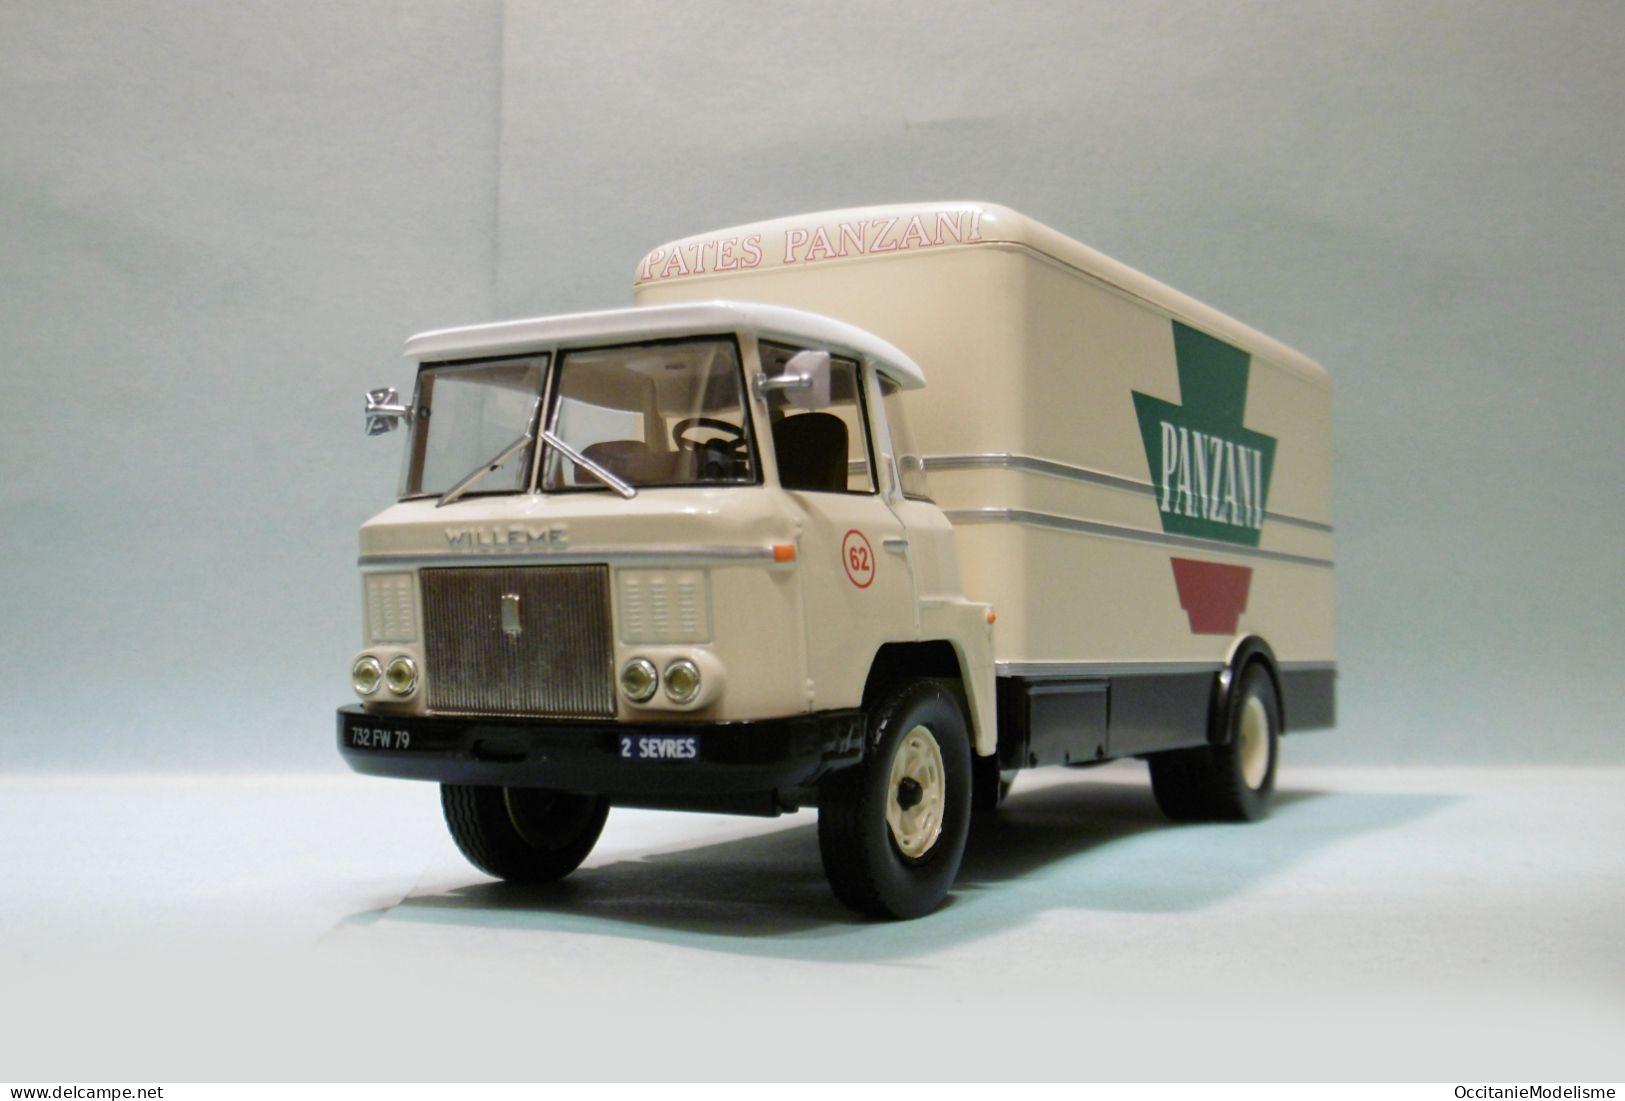 Altaya / Ixo - Camion WILLEME TL201 HORIZON 1964 Panzani BO 1/43 - LKW